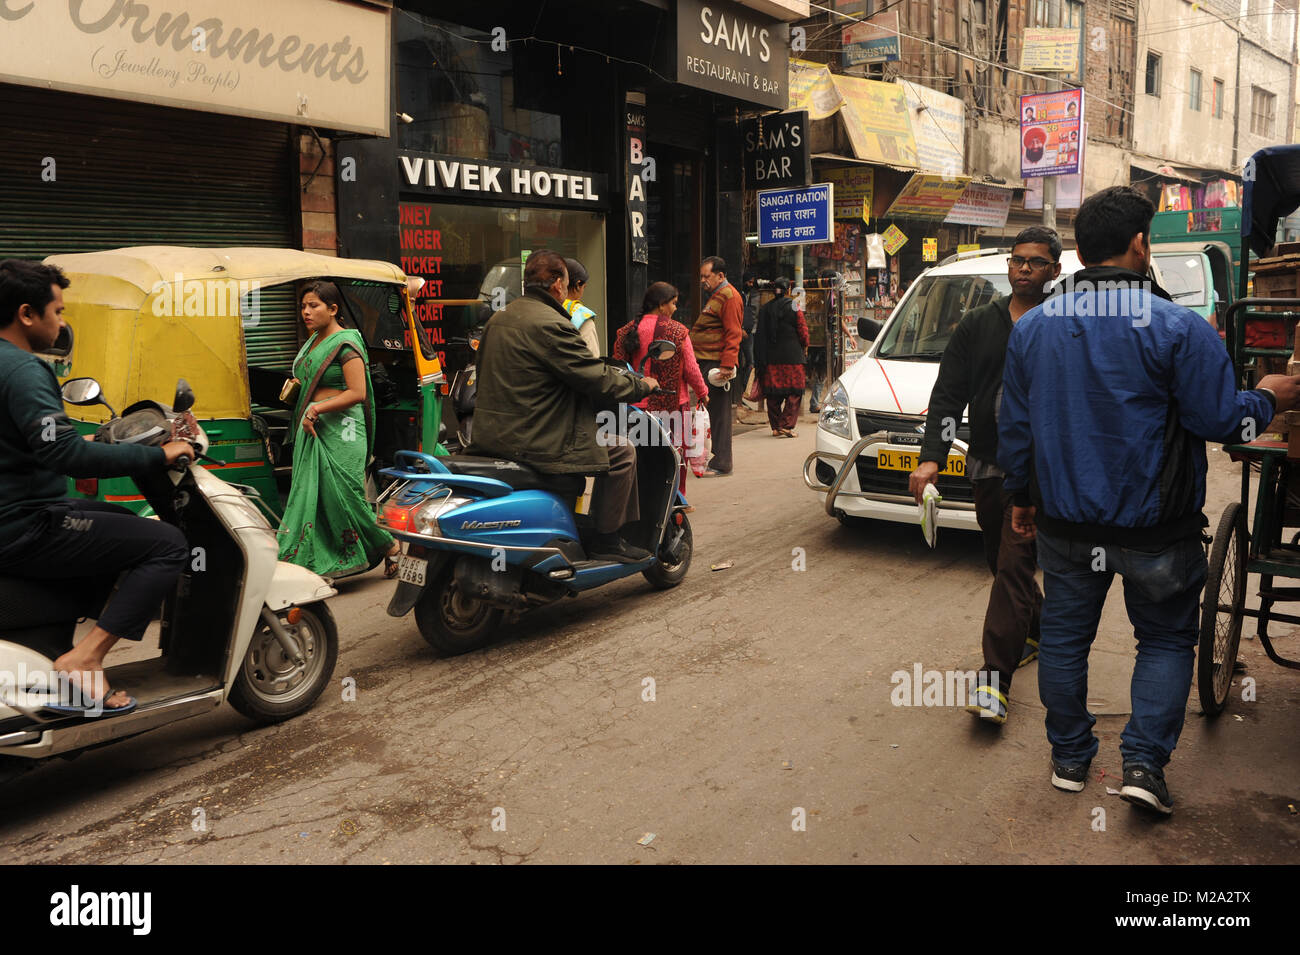 A busy street scene in Paharganj, India Stock Photo